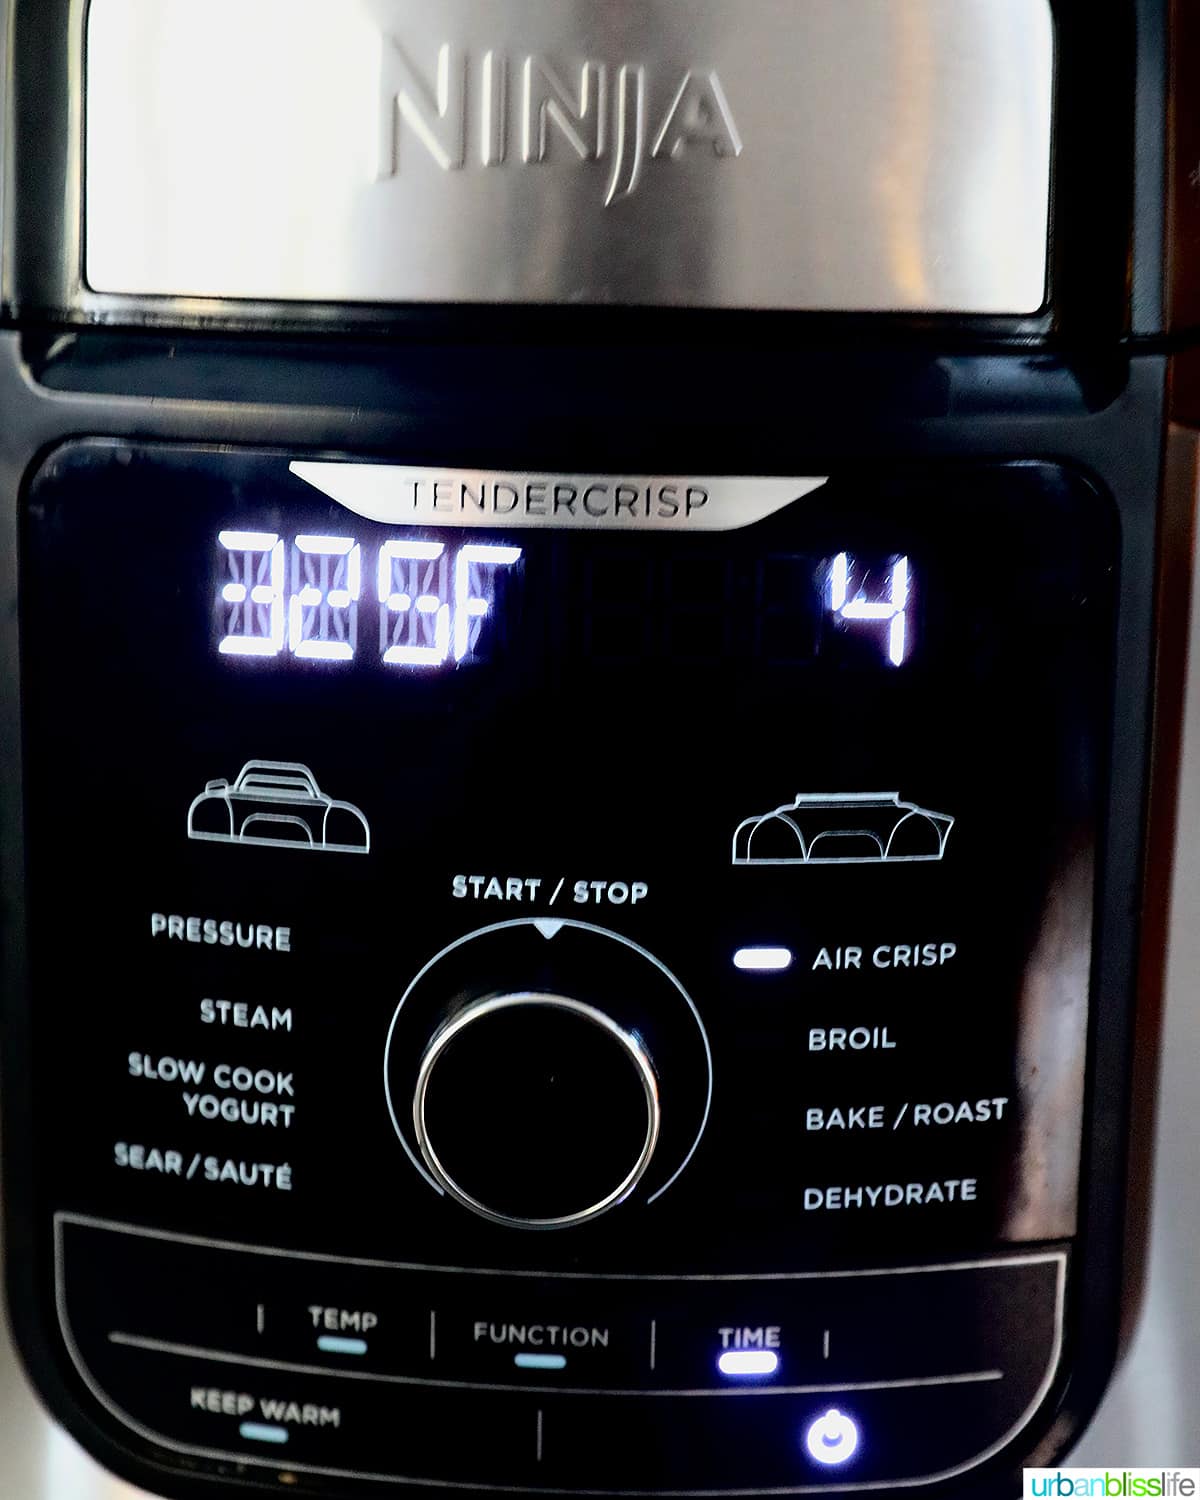 Ninja Foodi Air Fryer set to 325 degrees for 4 minutes.